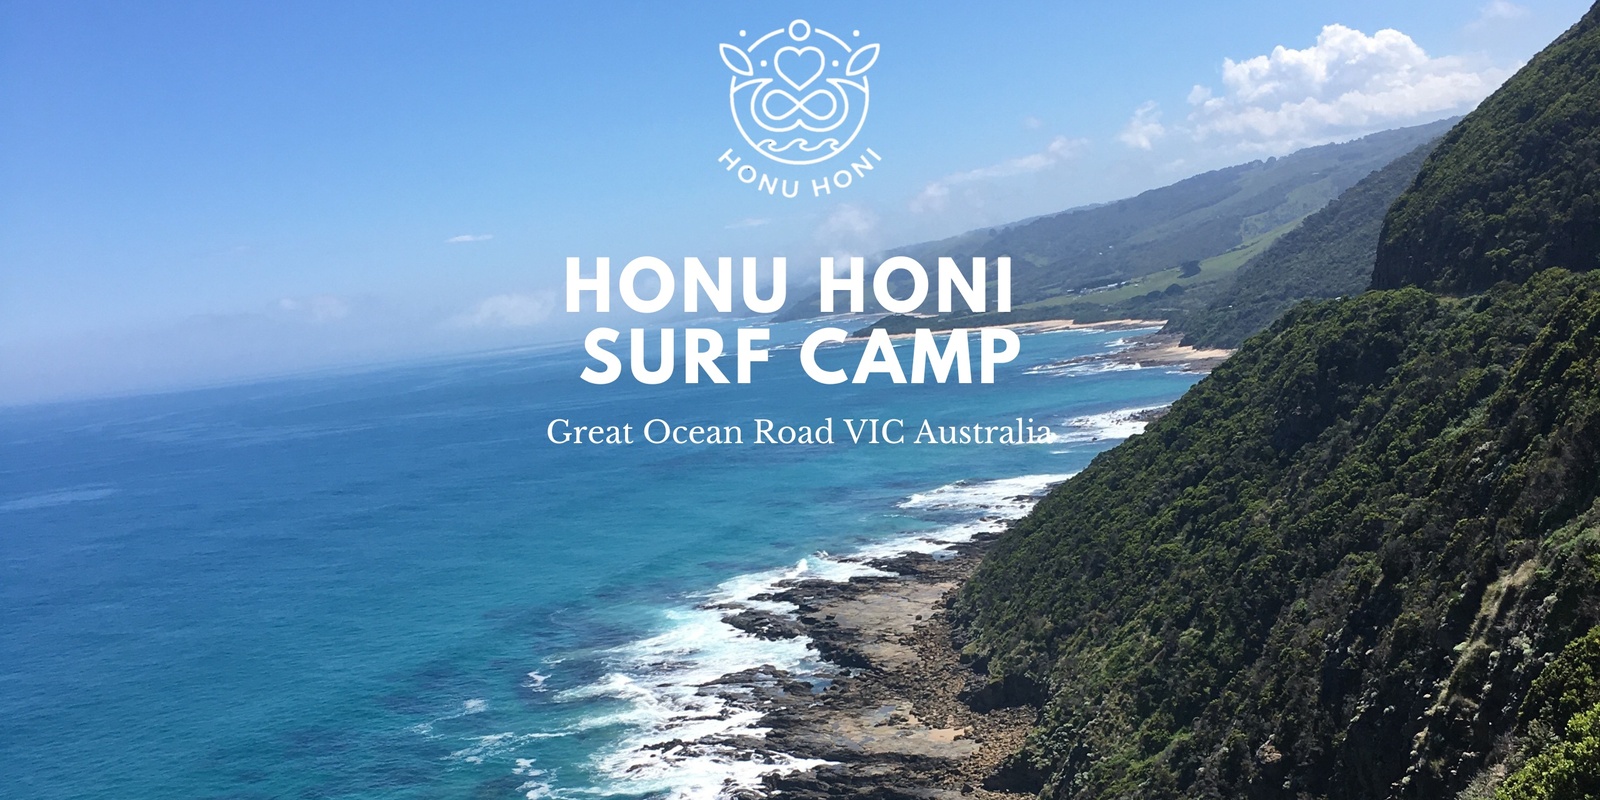 Honu Honi Surf Camp's banner